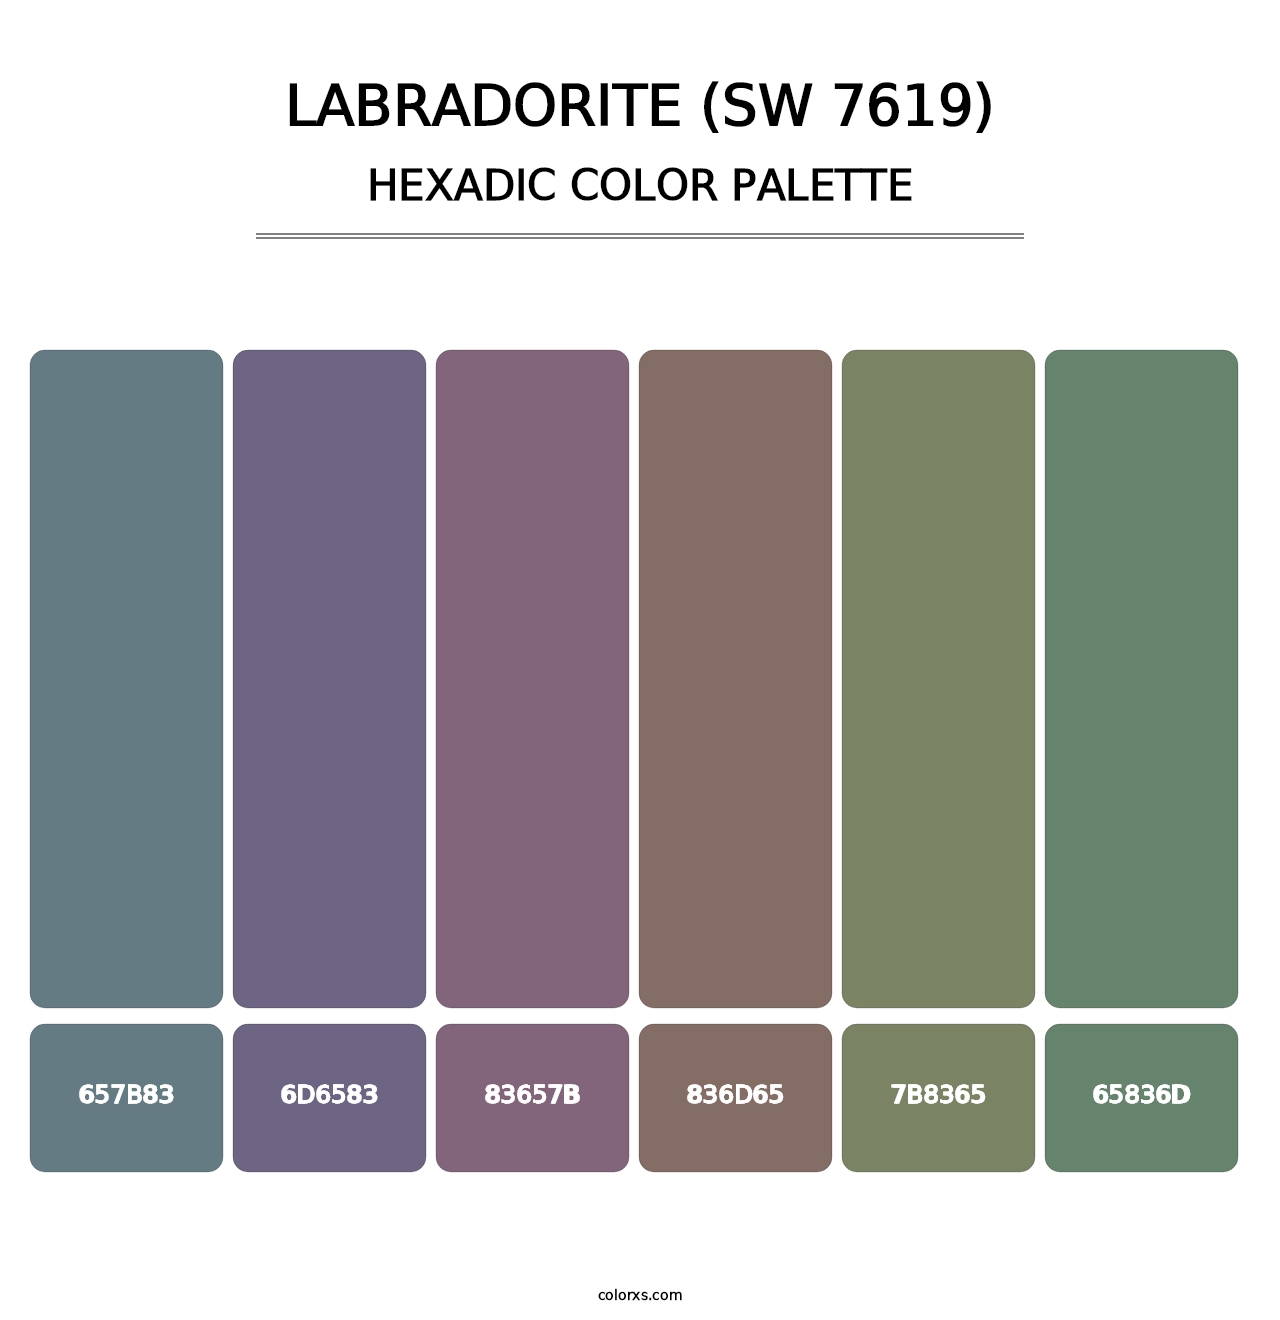 Labradorite (SW 7619) - Hexadic Color Palette